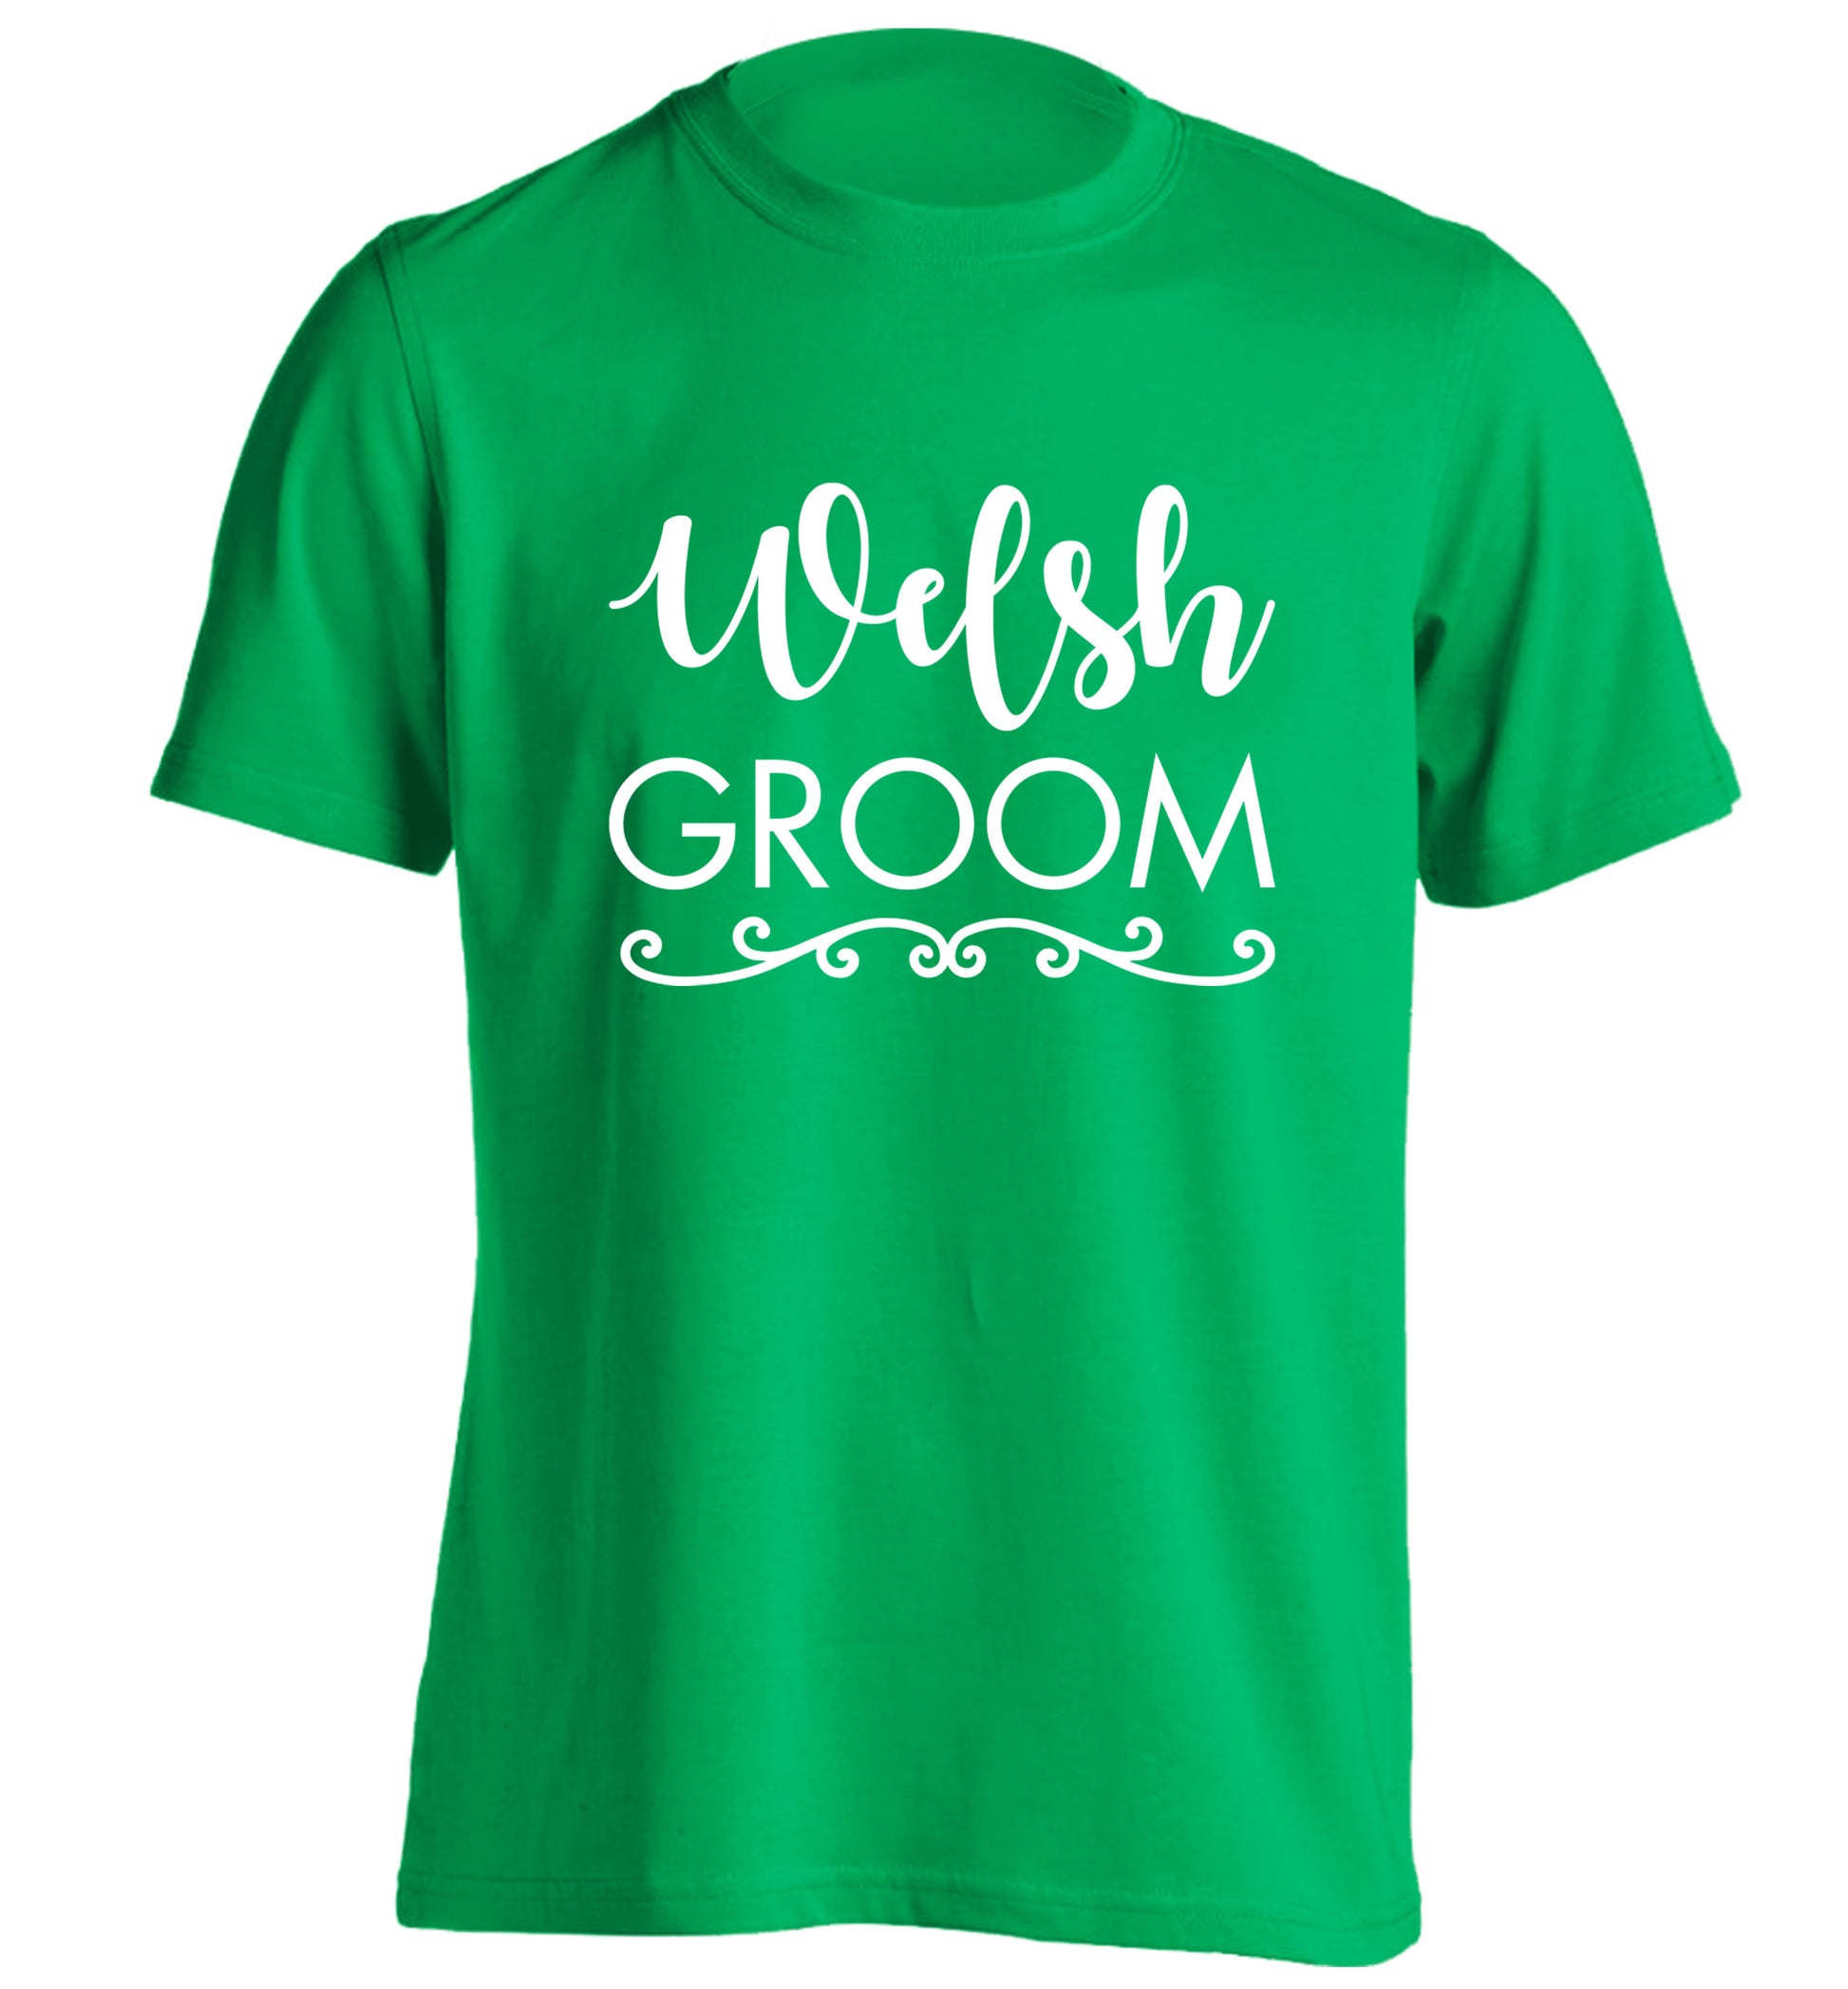 Welsh groom adults unisex green Tshirt 2XL